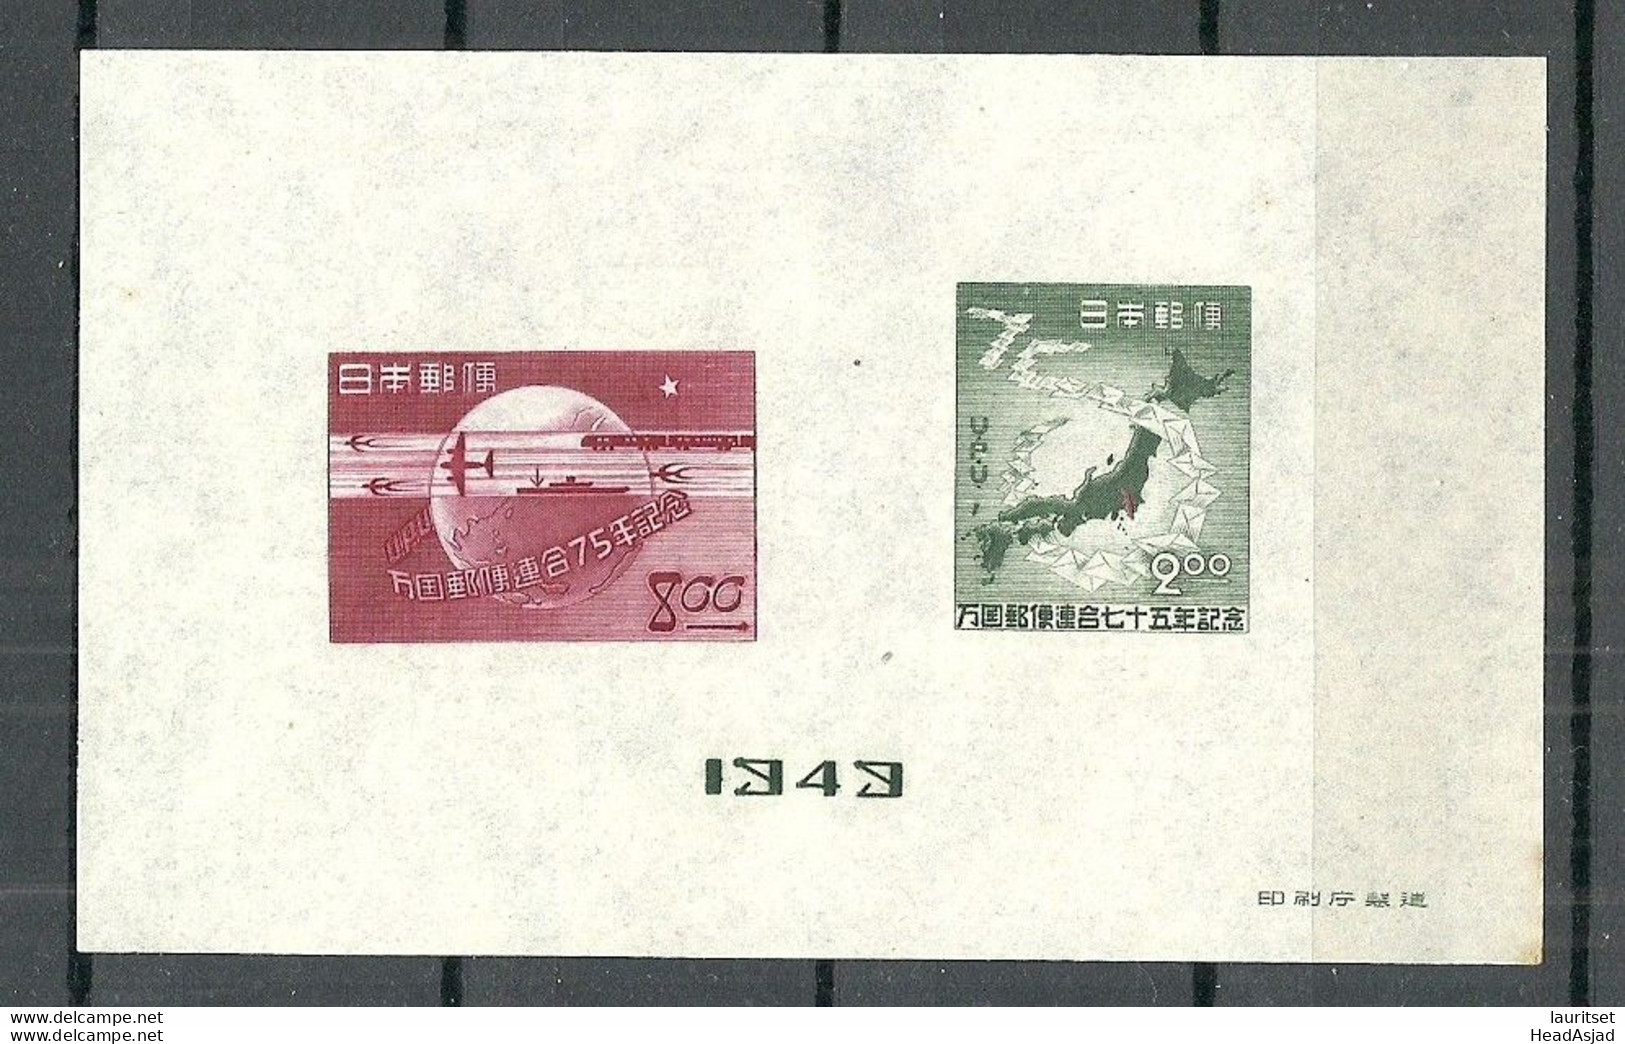 JAPAN Nippon 1949 Block S/S Michel 30 MNH UPU Weltpostverein - UPU (Unione Postale Universale)